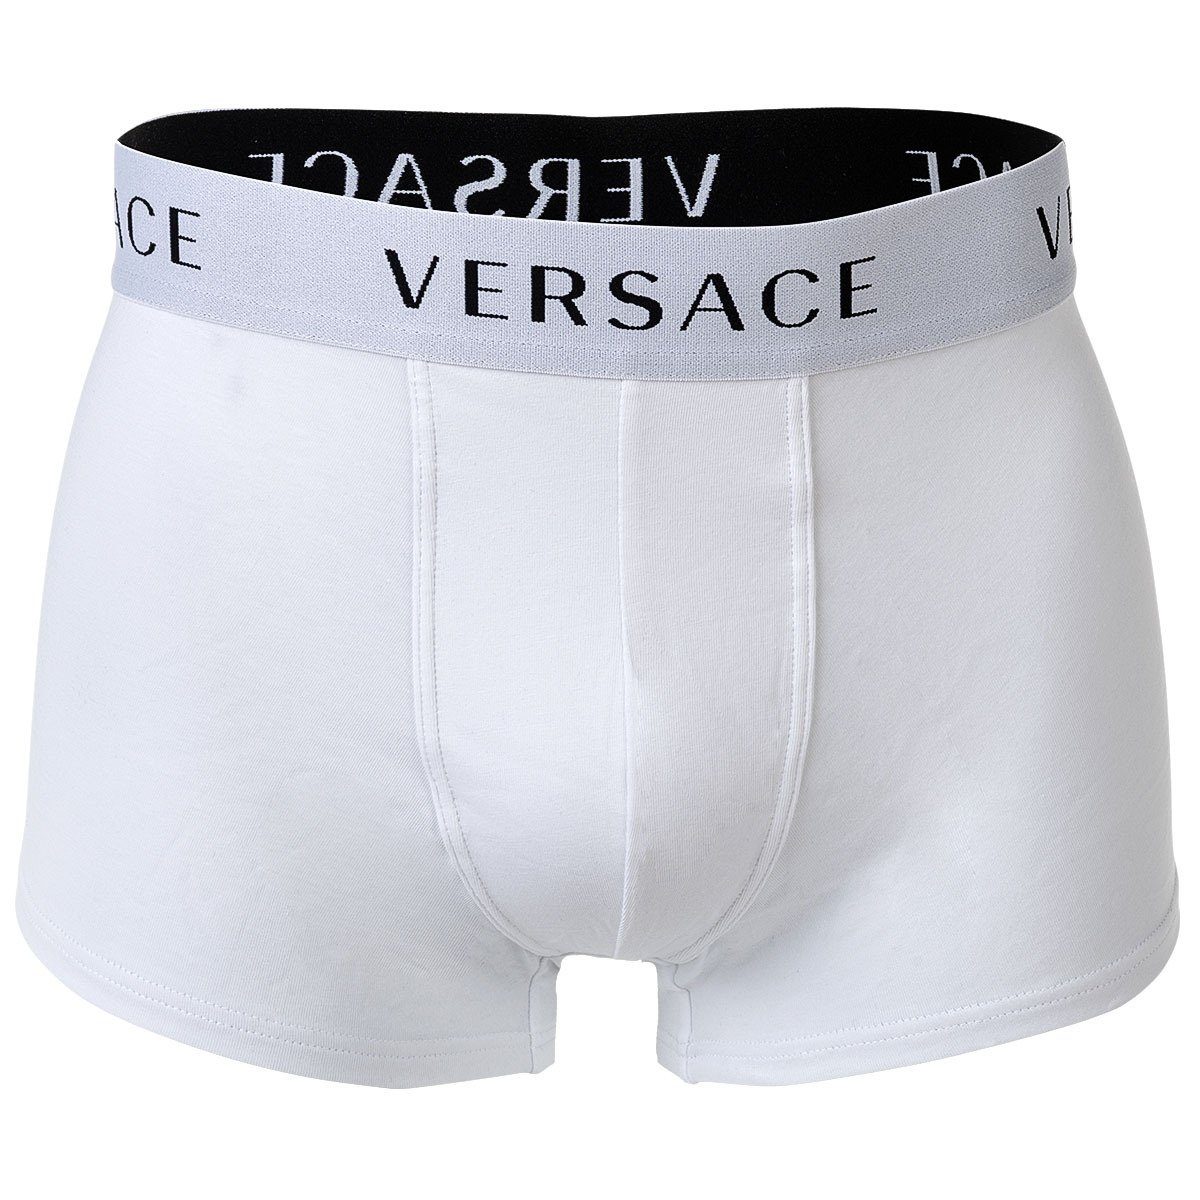 Versace Pack Shorts, Boxer - Weiß/Blau 2er Boxer Herren Trunk